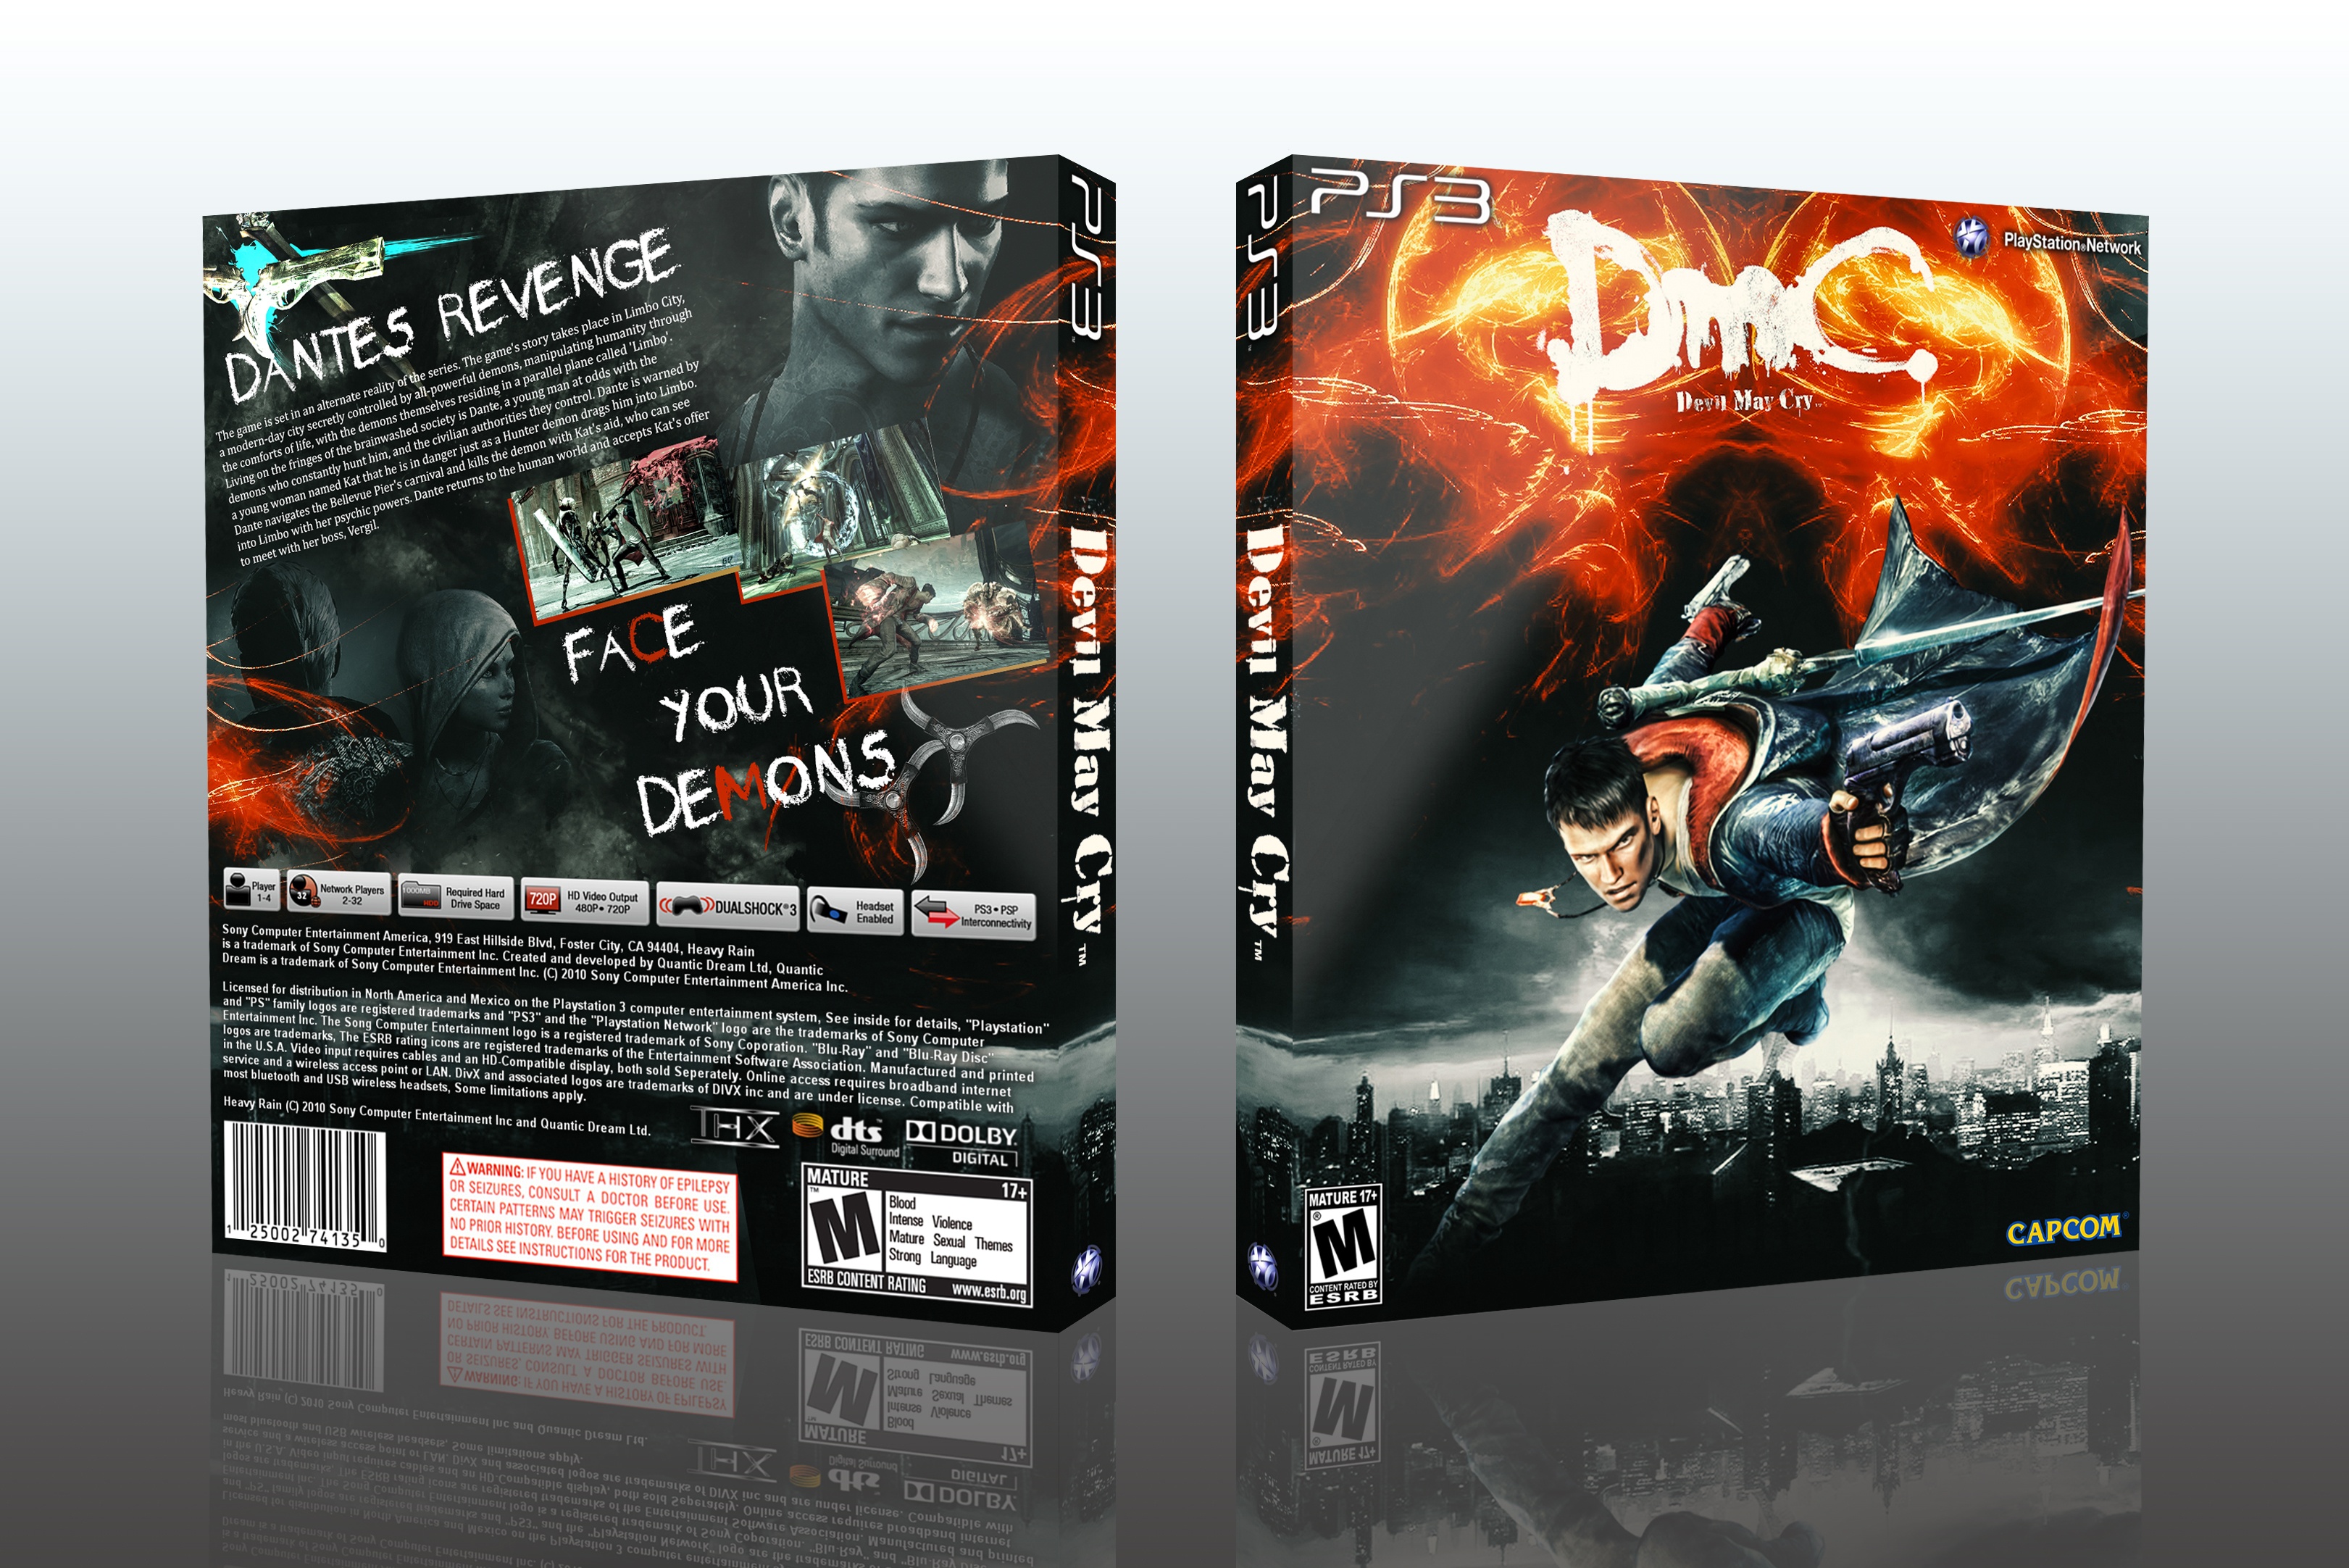 DMC: Devil May Cry box cover